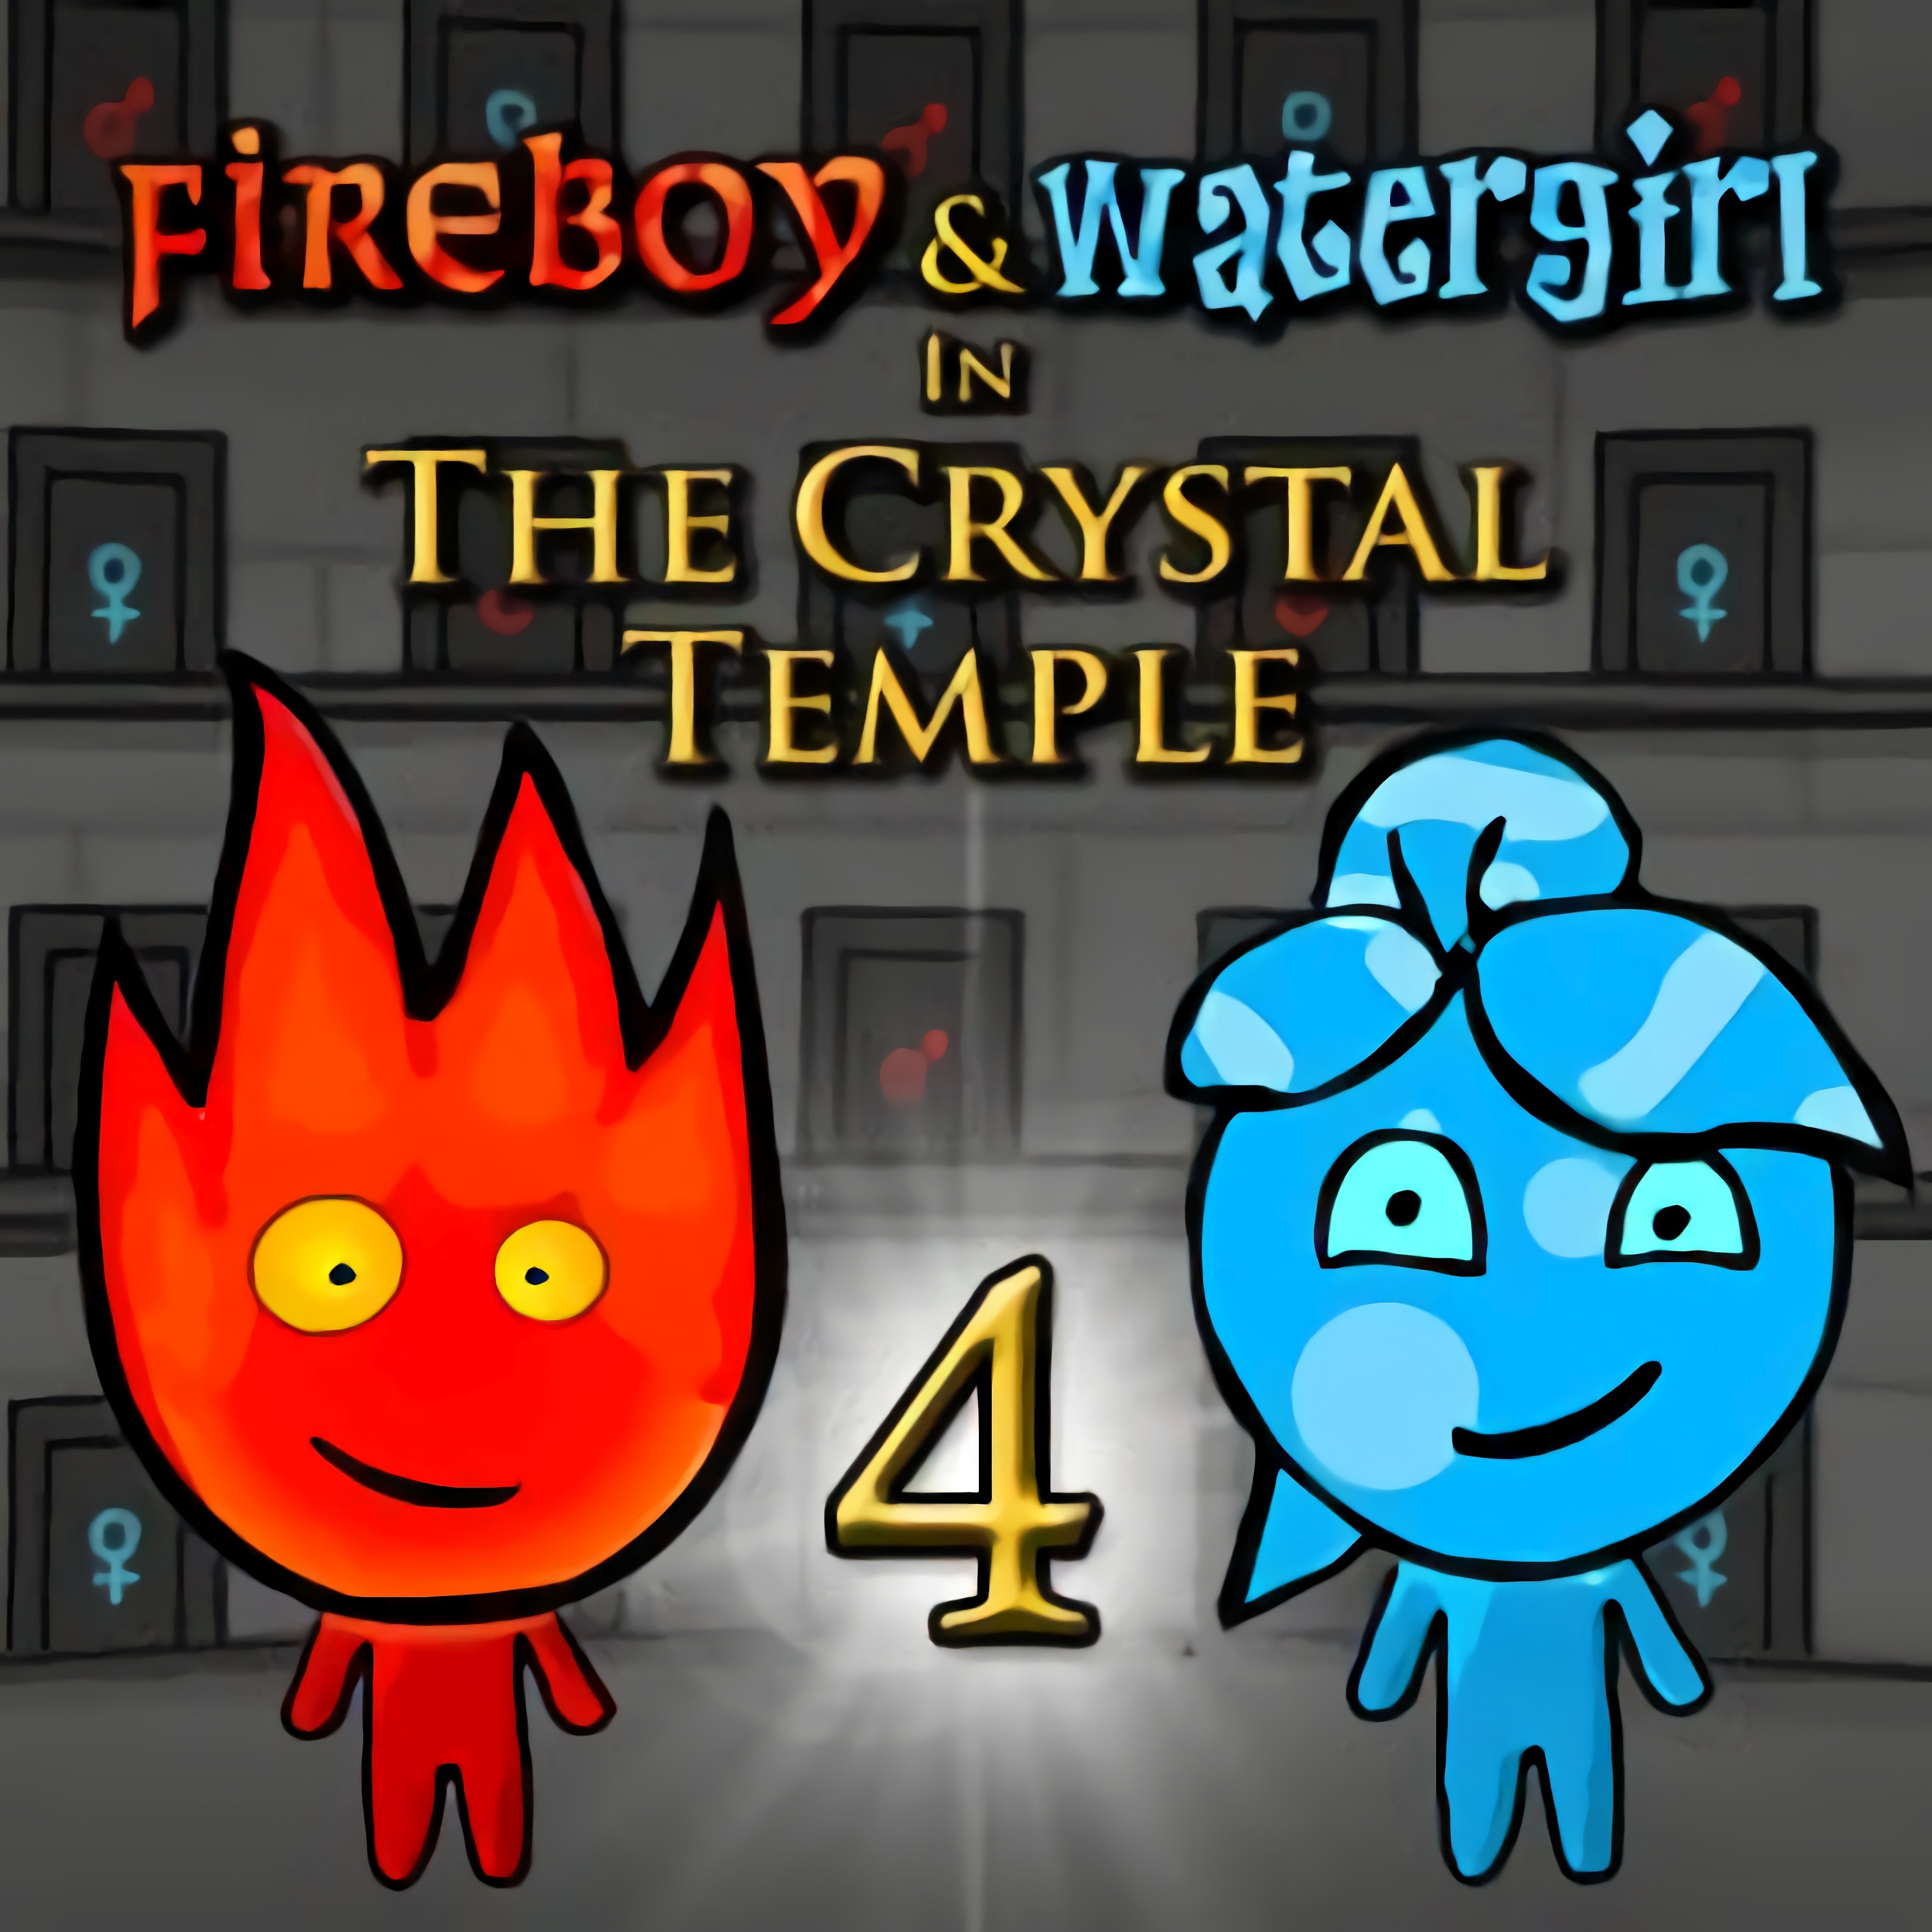 Fireboy and Watergirl mutiplayer games – Friv 4 school